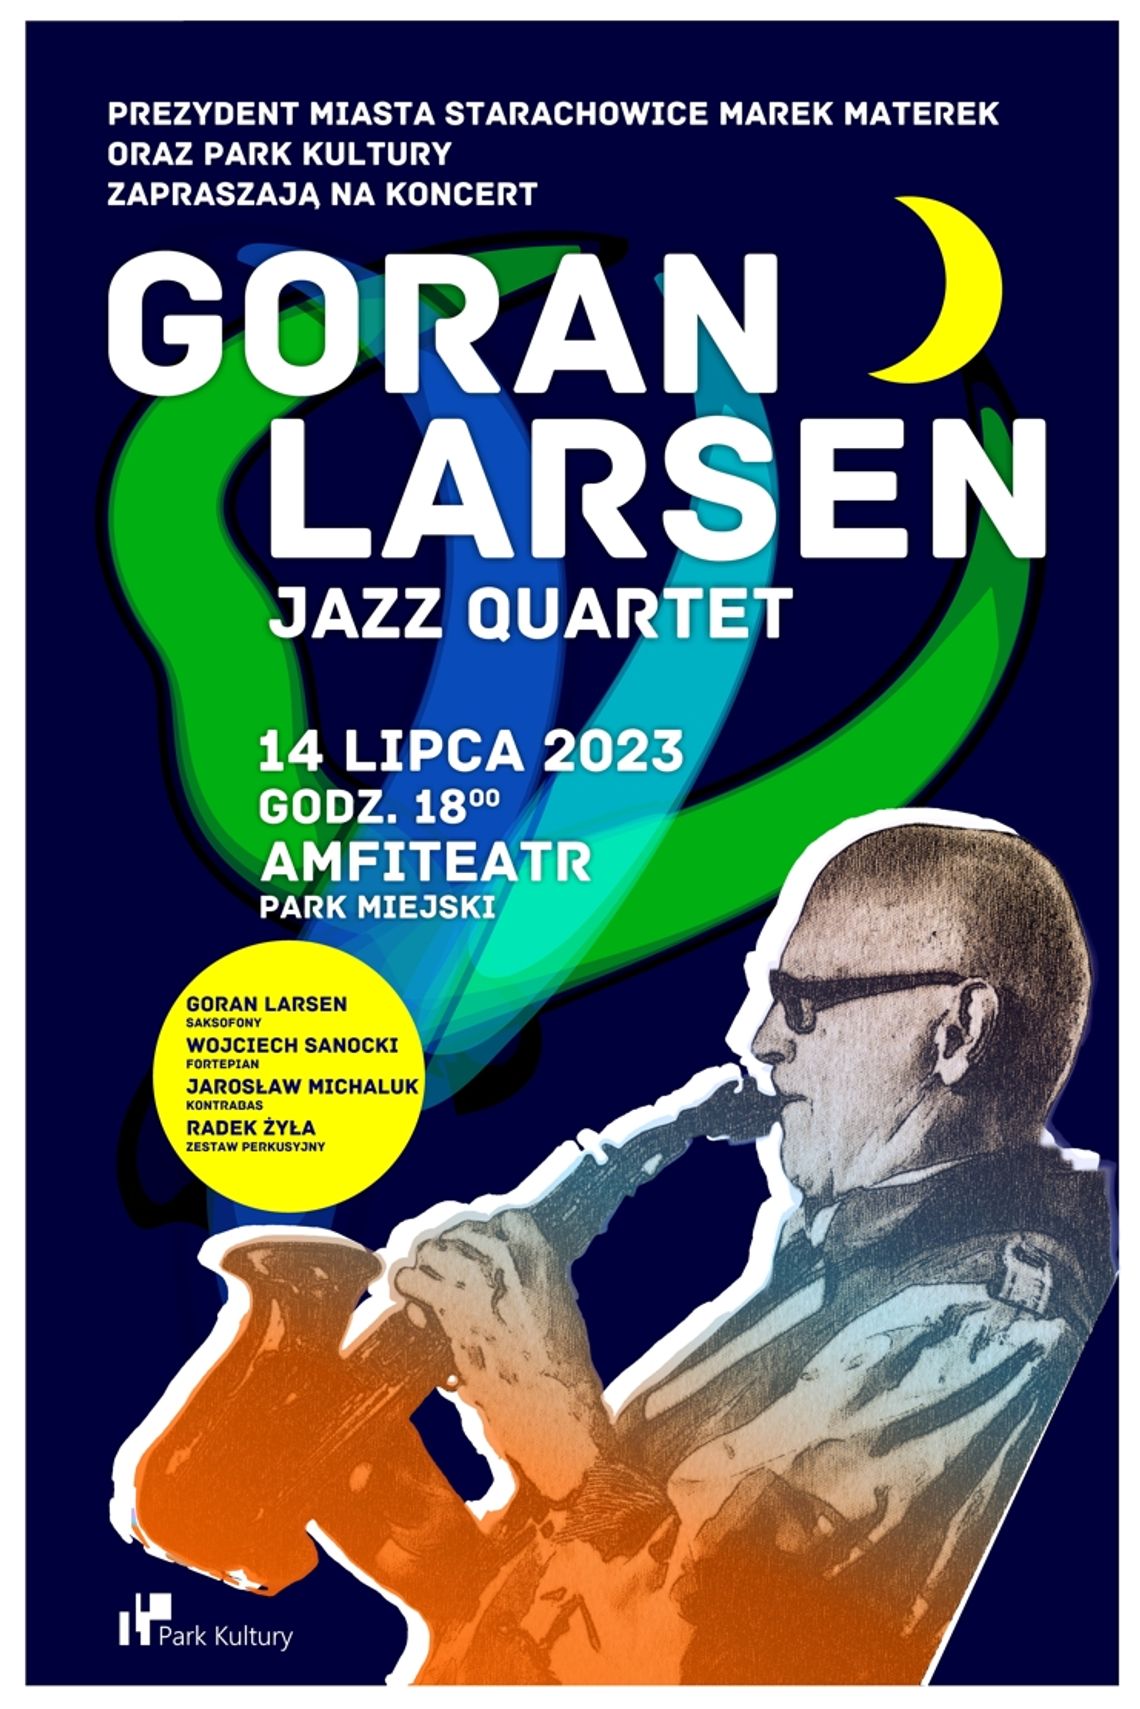 Wystąpi szwedzki saksofonista Goran Larsen